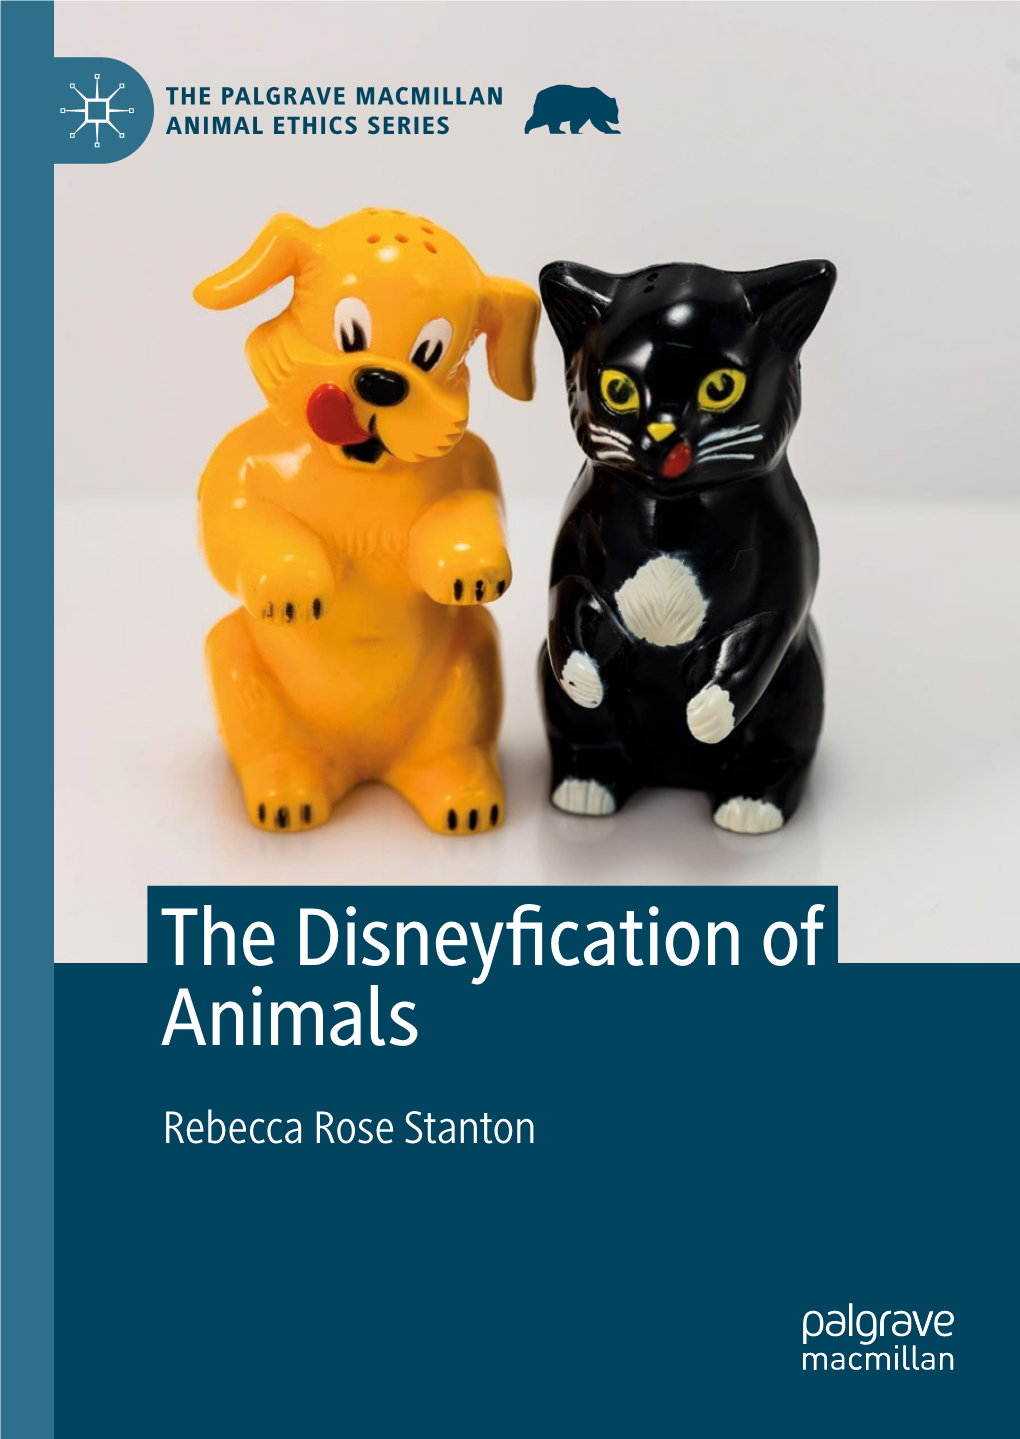 The Disneyfication of Animals Rebecca Rose Stanton the Palgrave Macmillan Animal Ethics Series